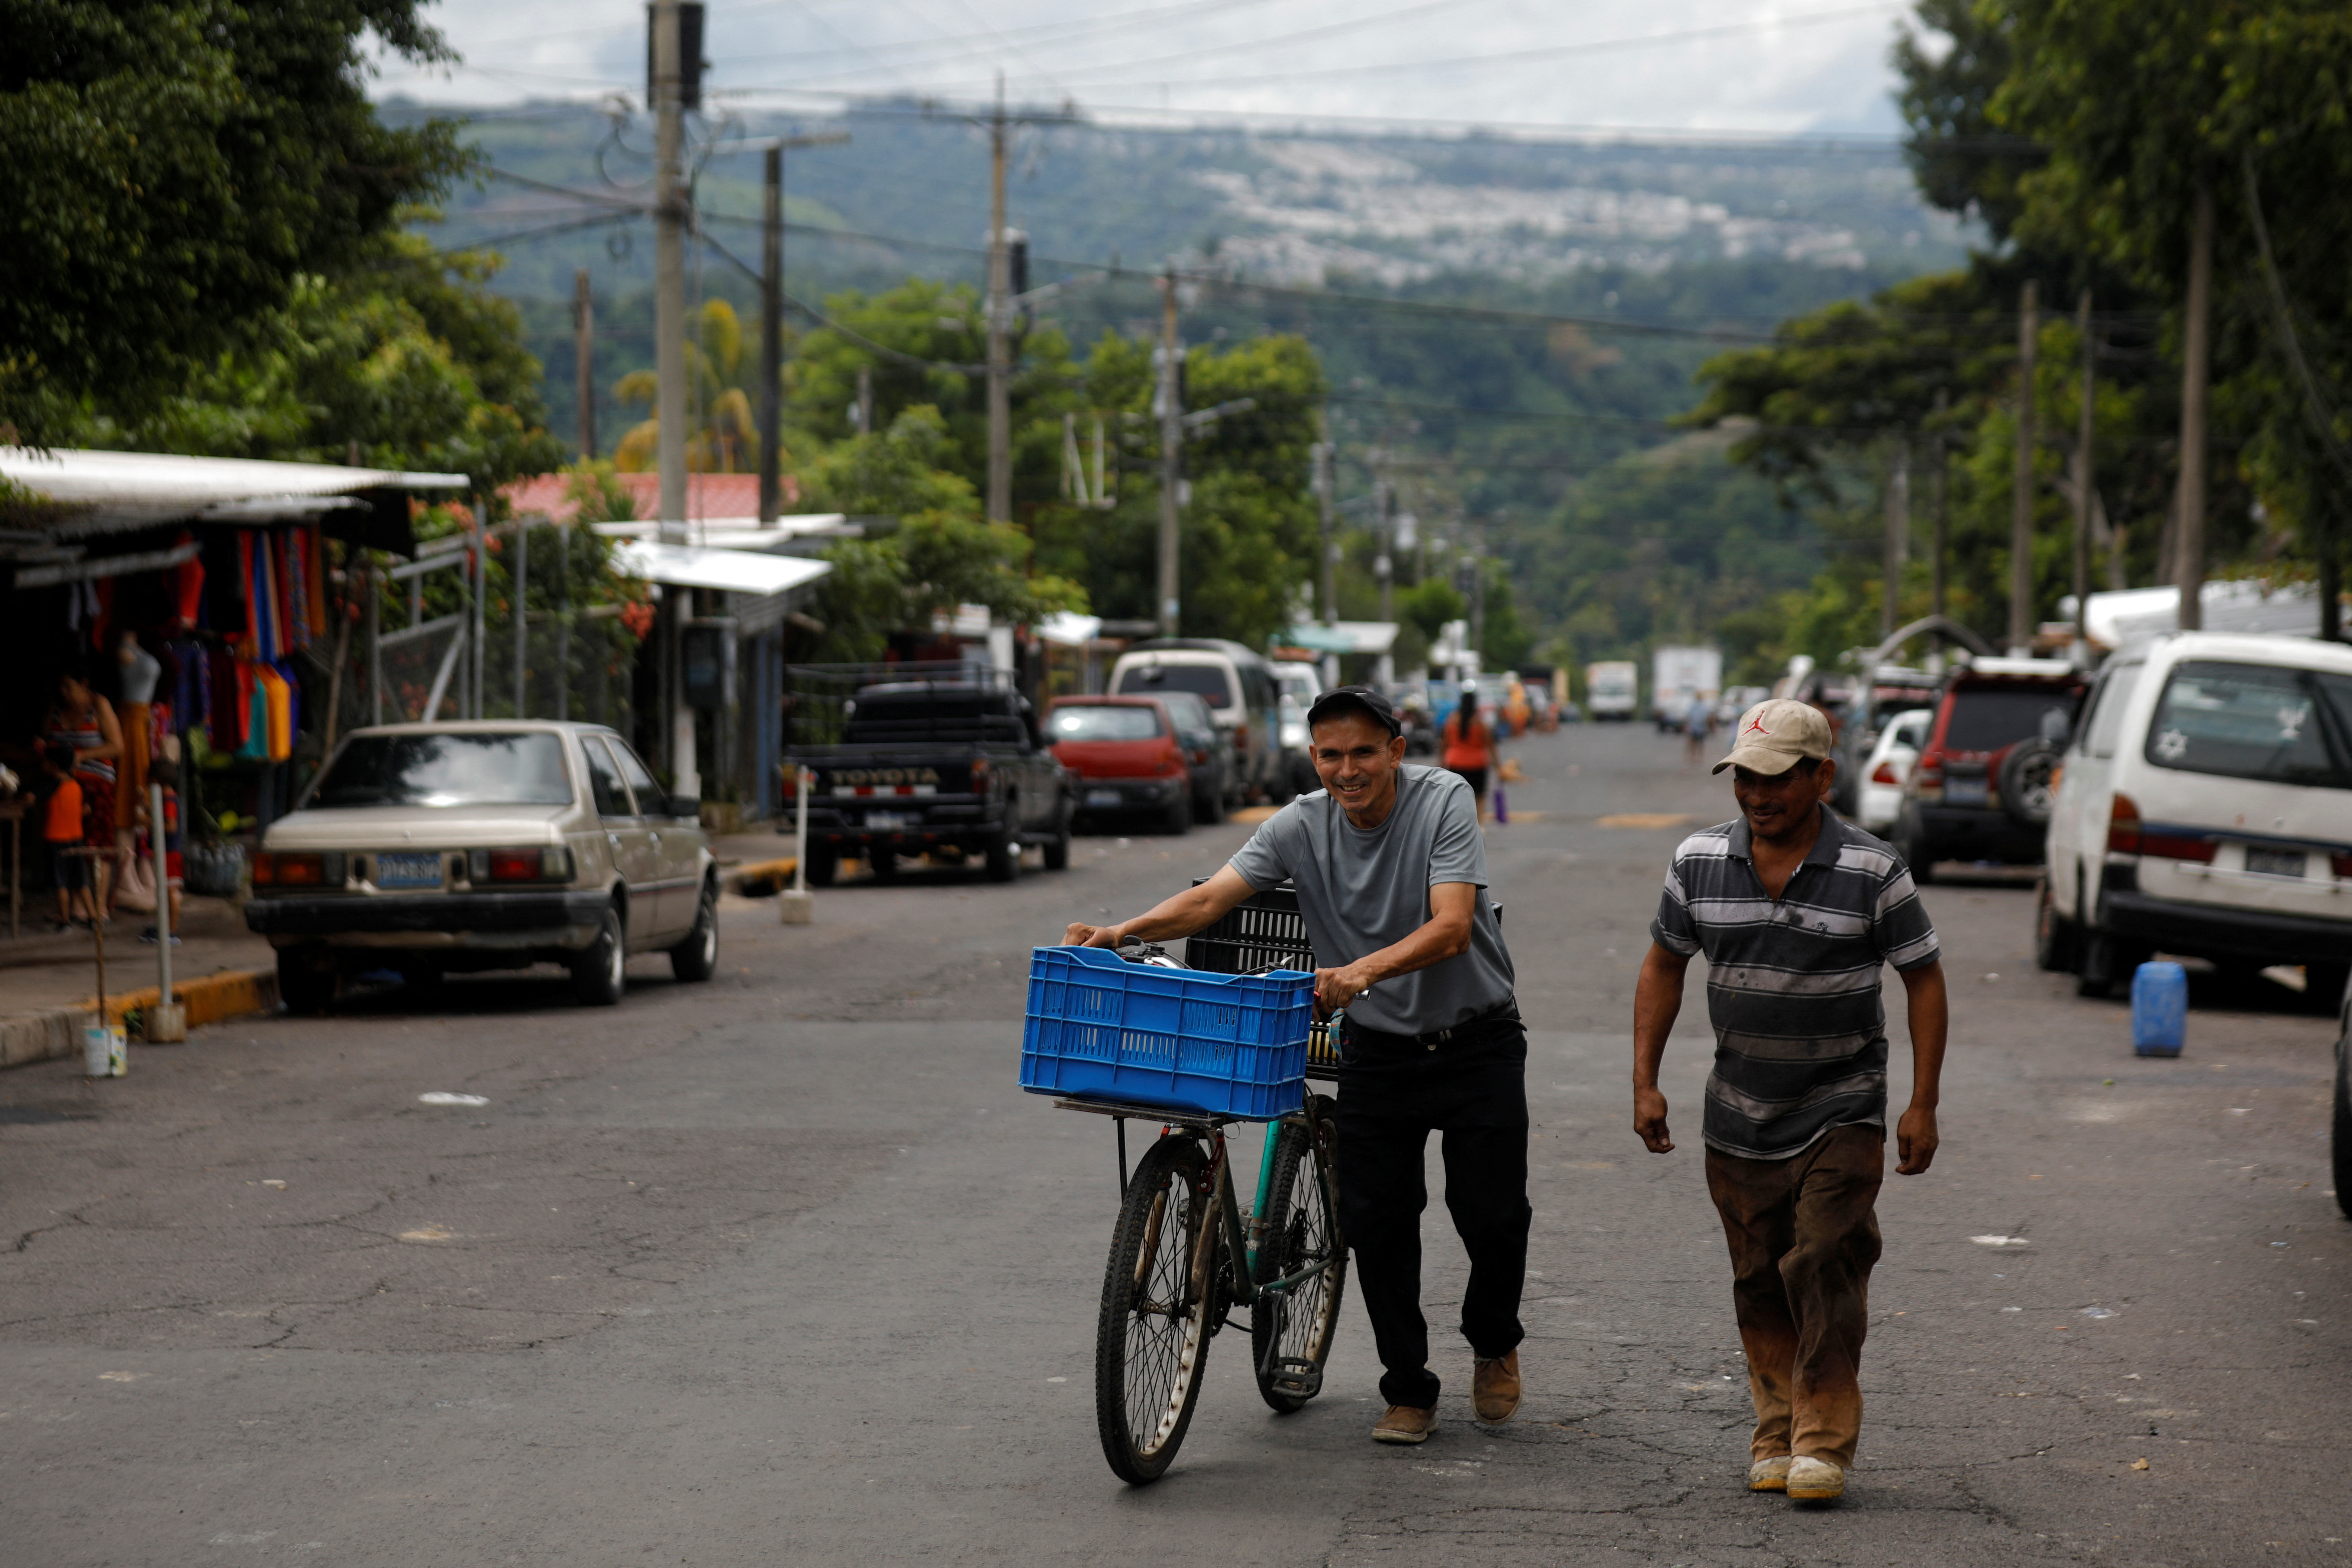 El Salvador's Congress extends emergency powers to fight gangs